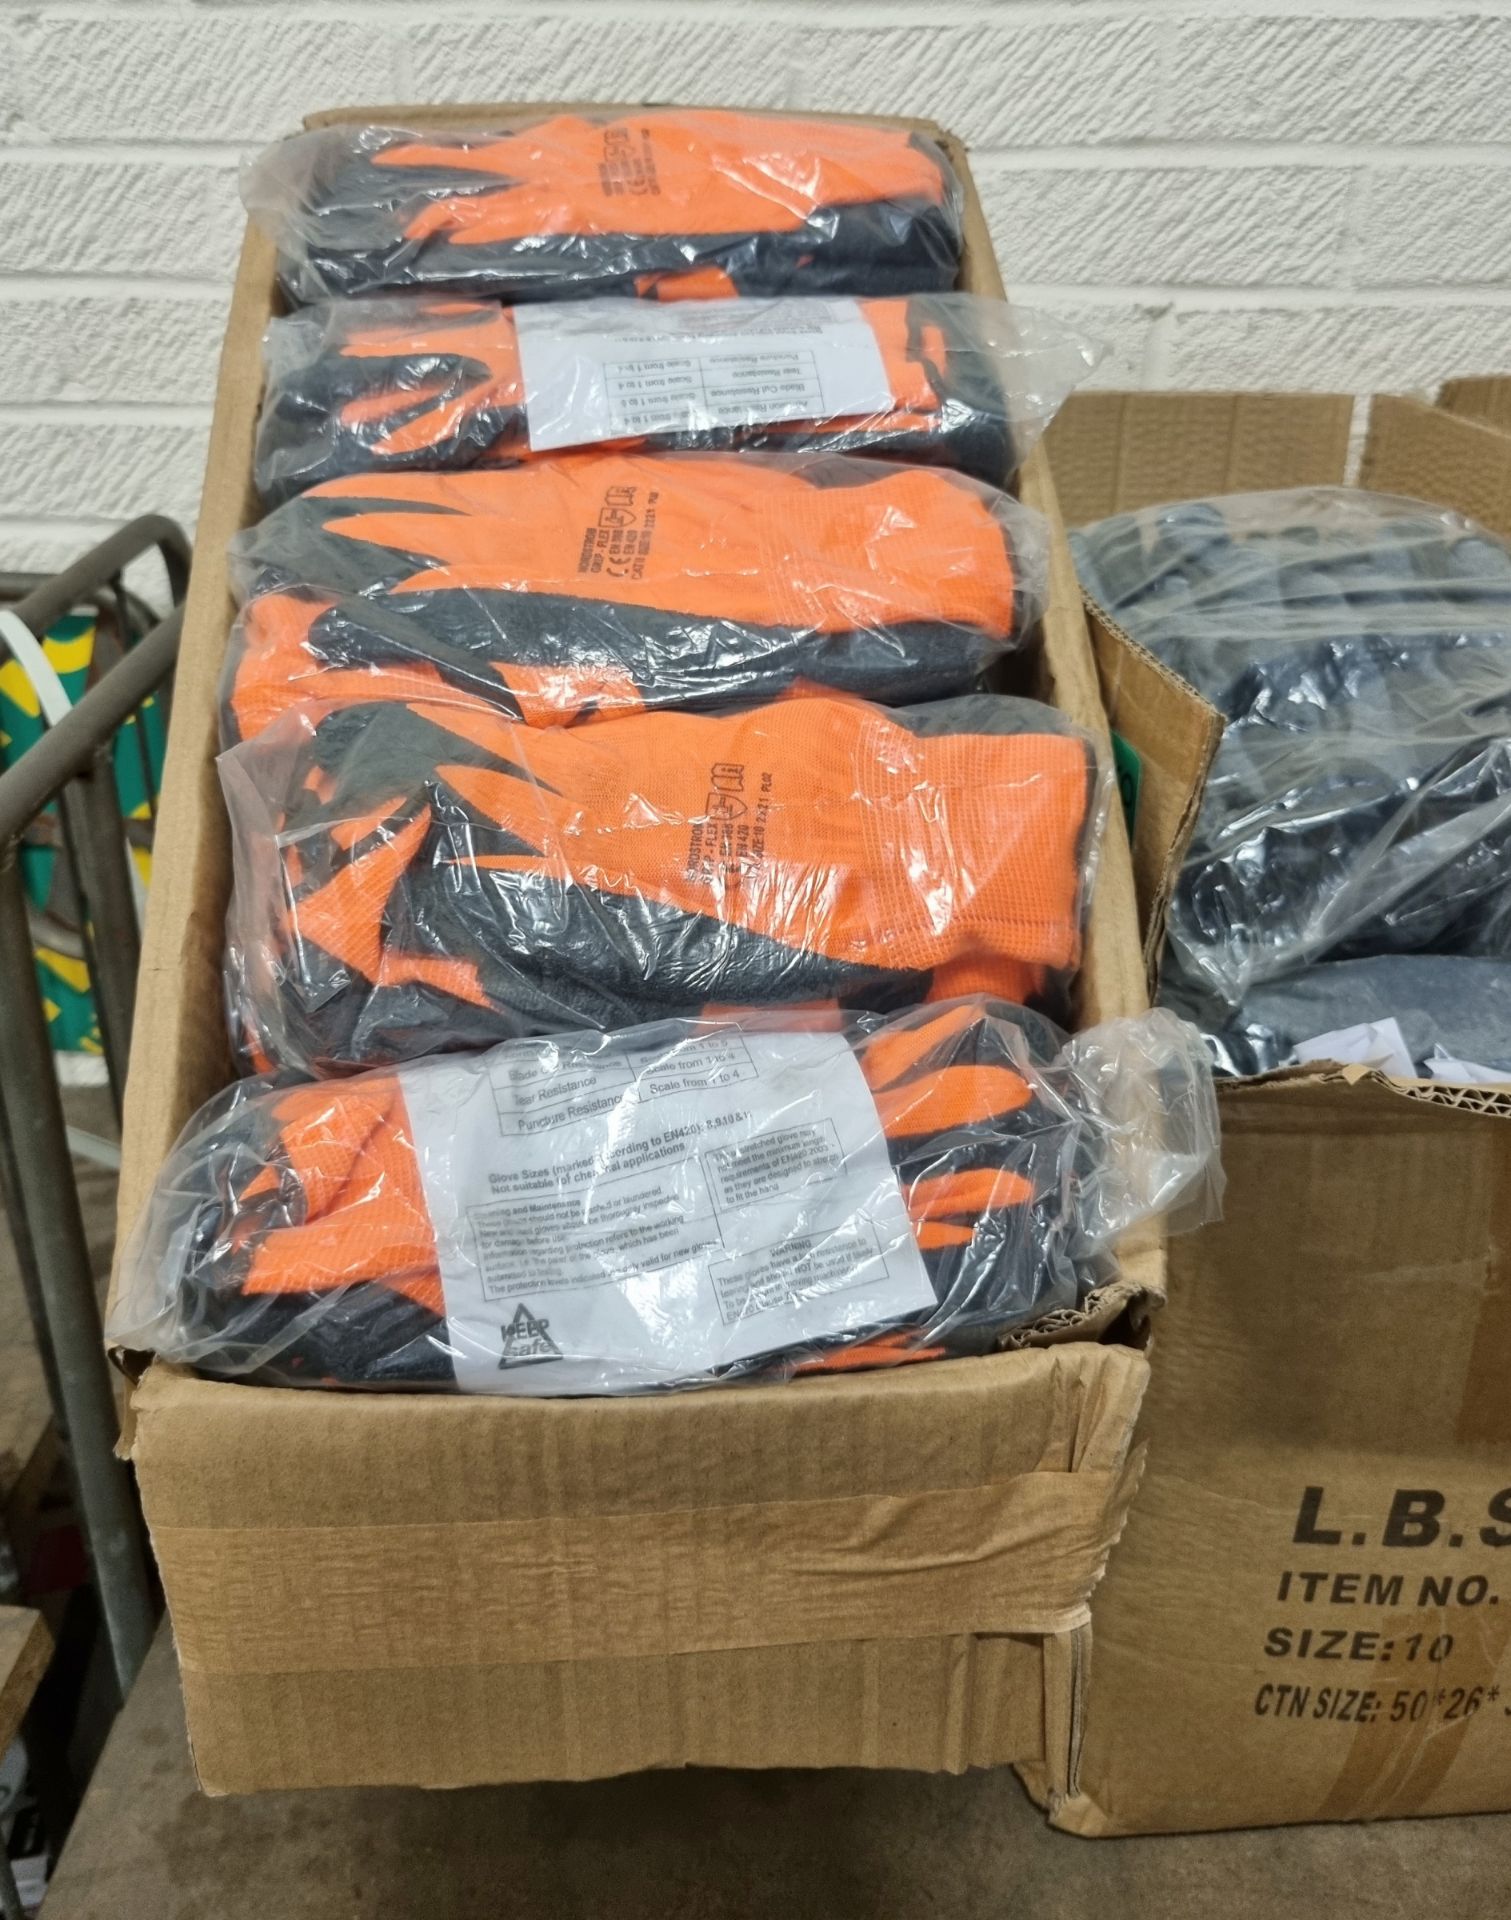 Latex Coated gloves - size 10 - 360 pairs (120 orange and black, 240 grey and black) - Image 2 of 4